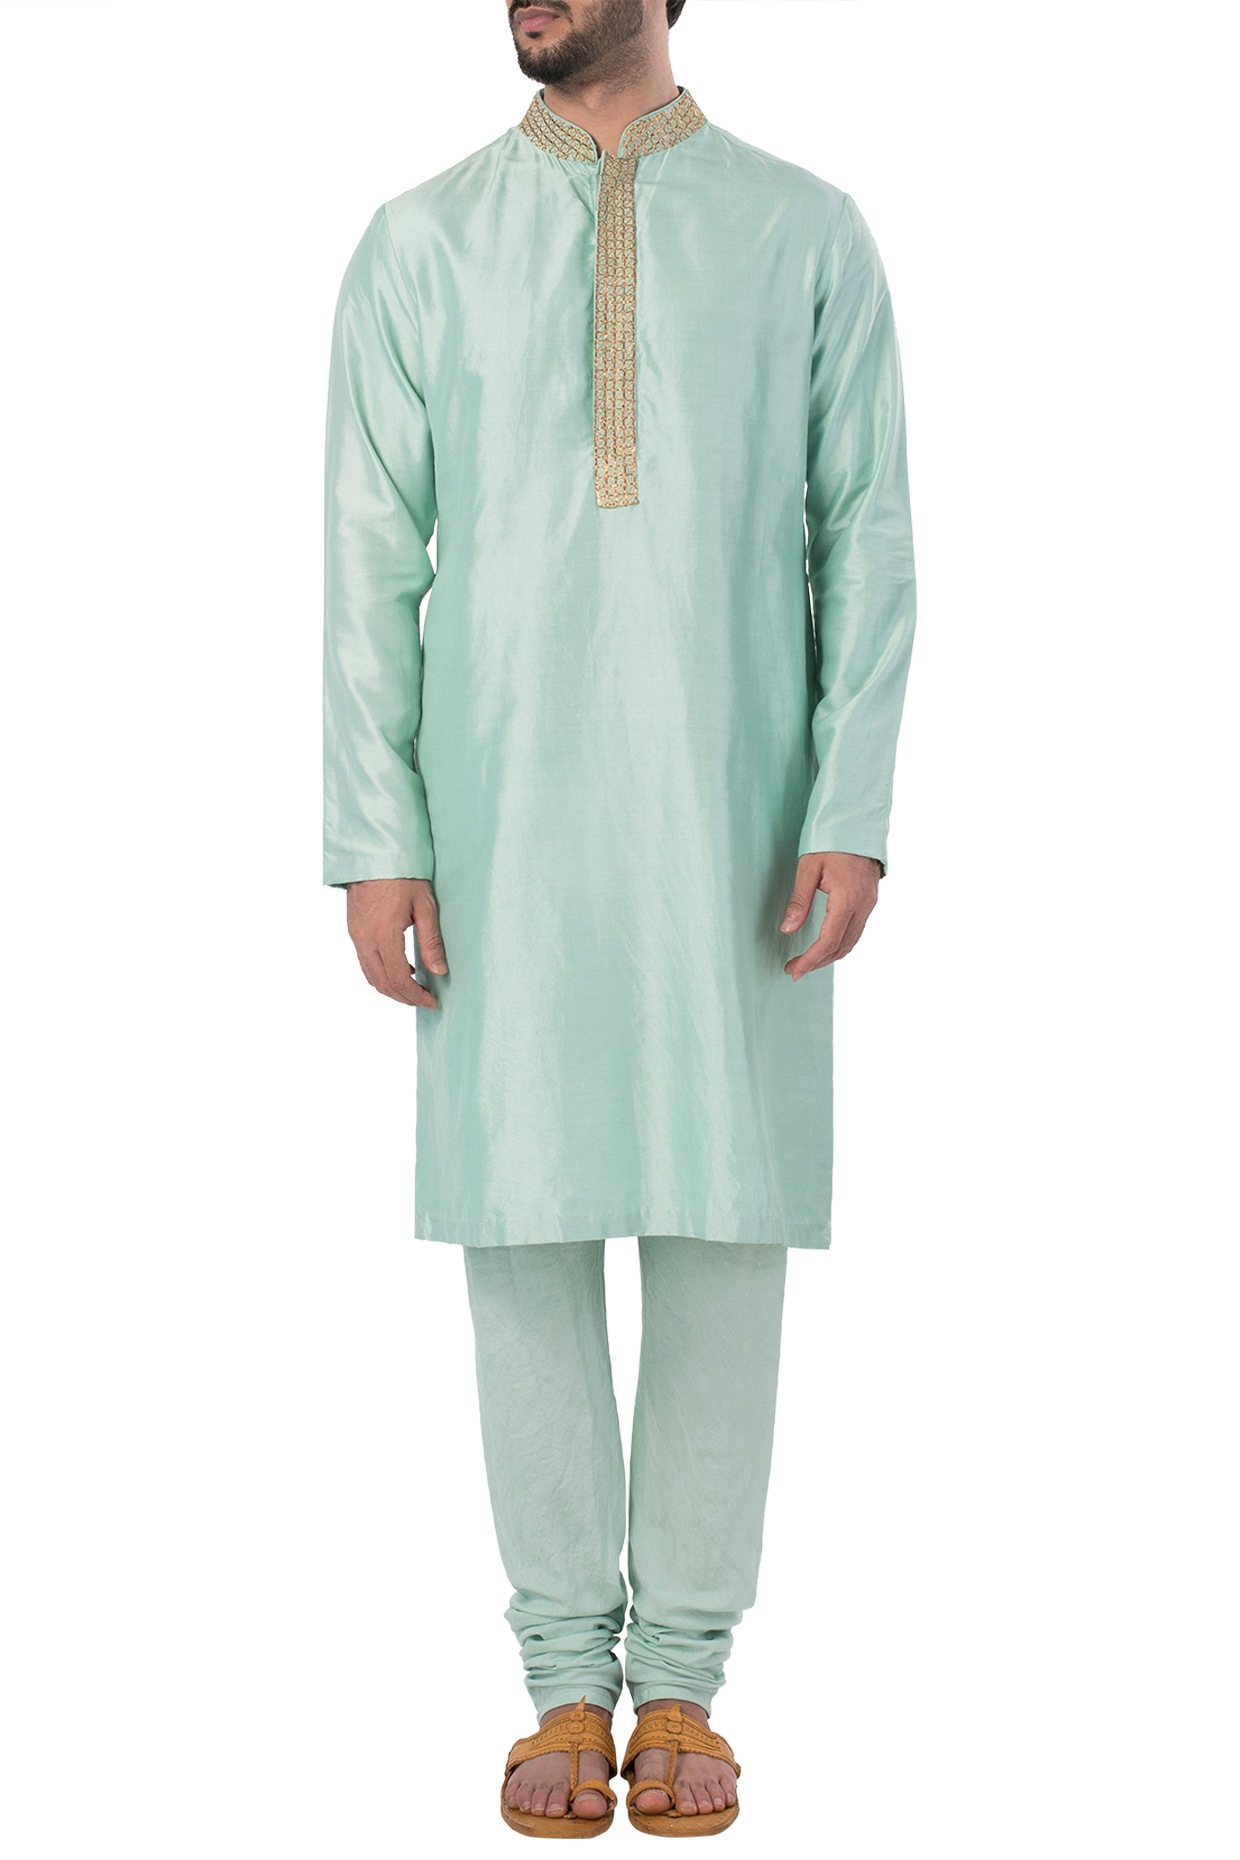 Atasi Solid Ready Made Churidar Drawstring Pajama For Mens Ethnic Bottom  Pant - Walmart.com